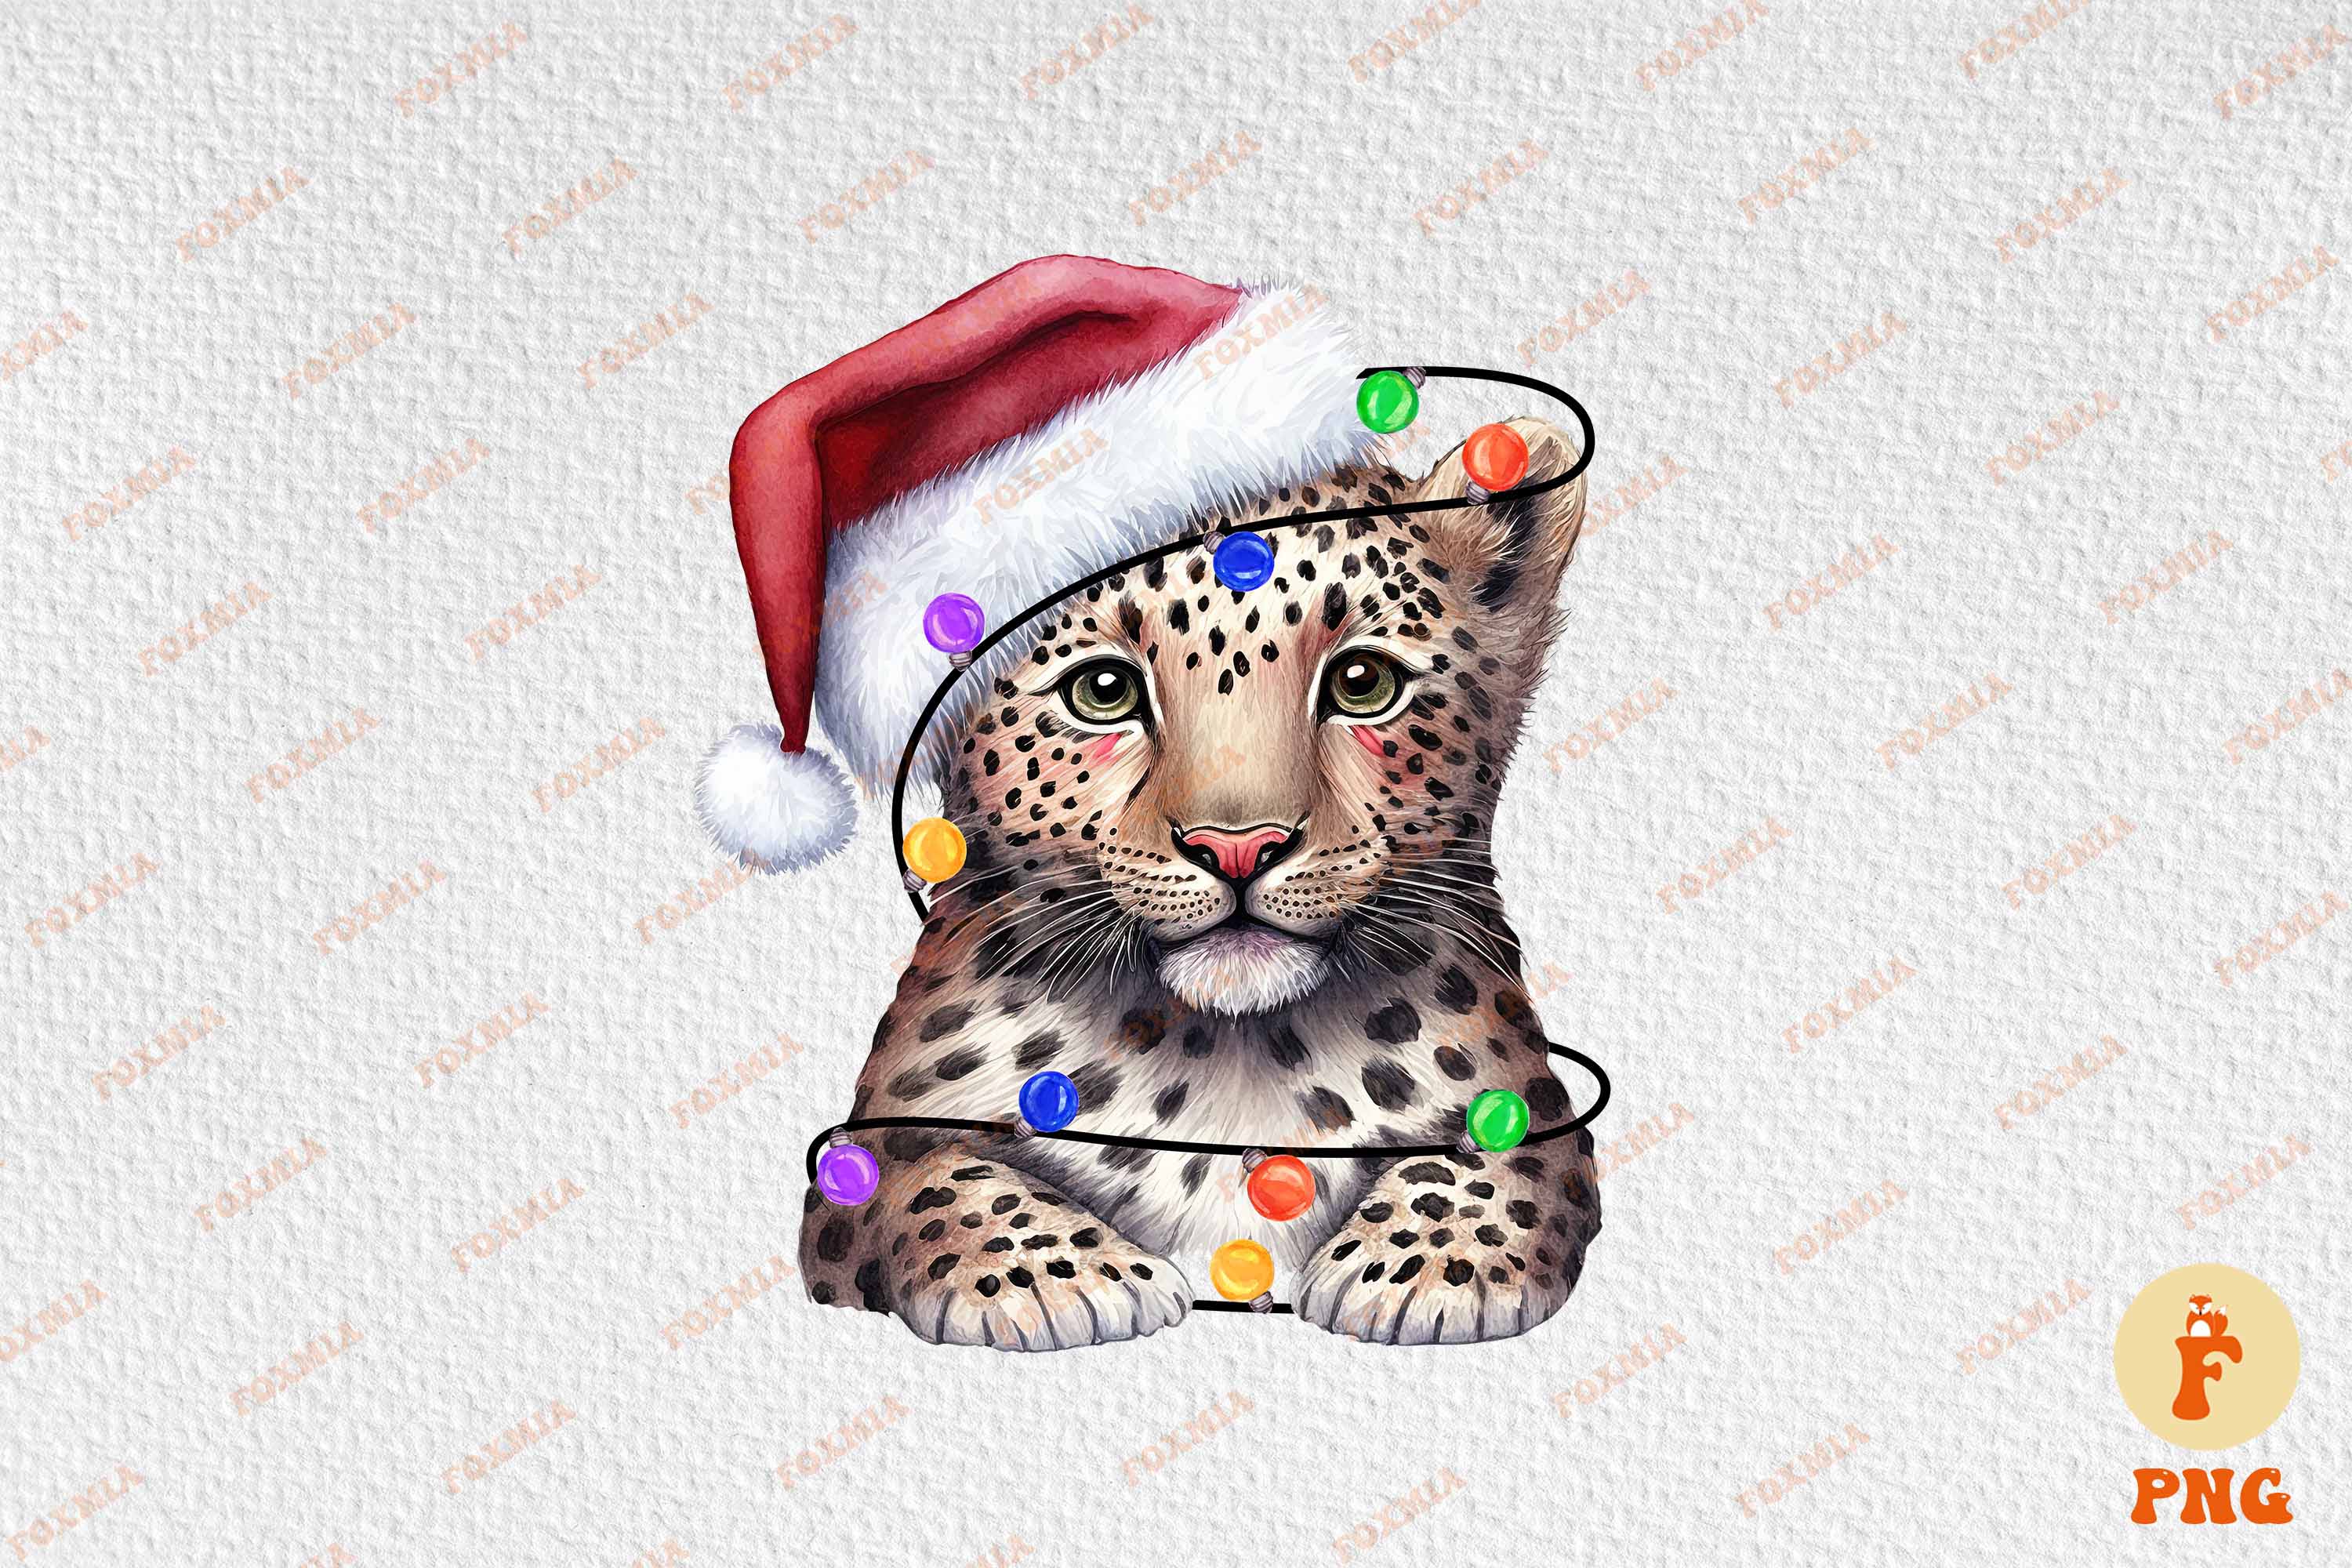 Beautiful image of a leopard wearing a santa hat.